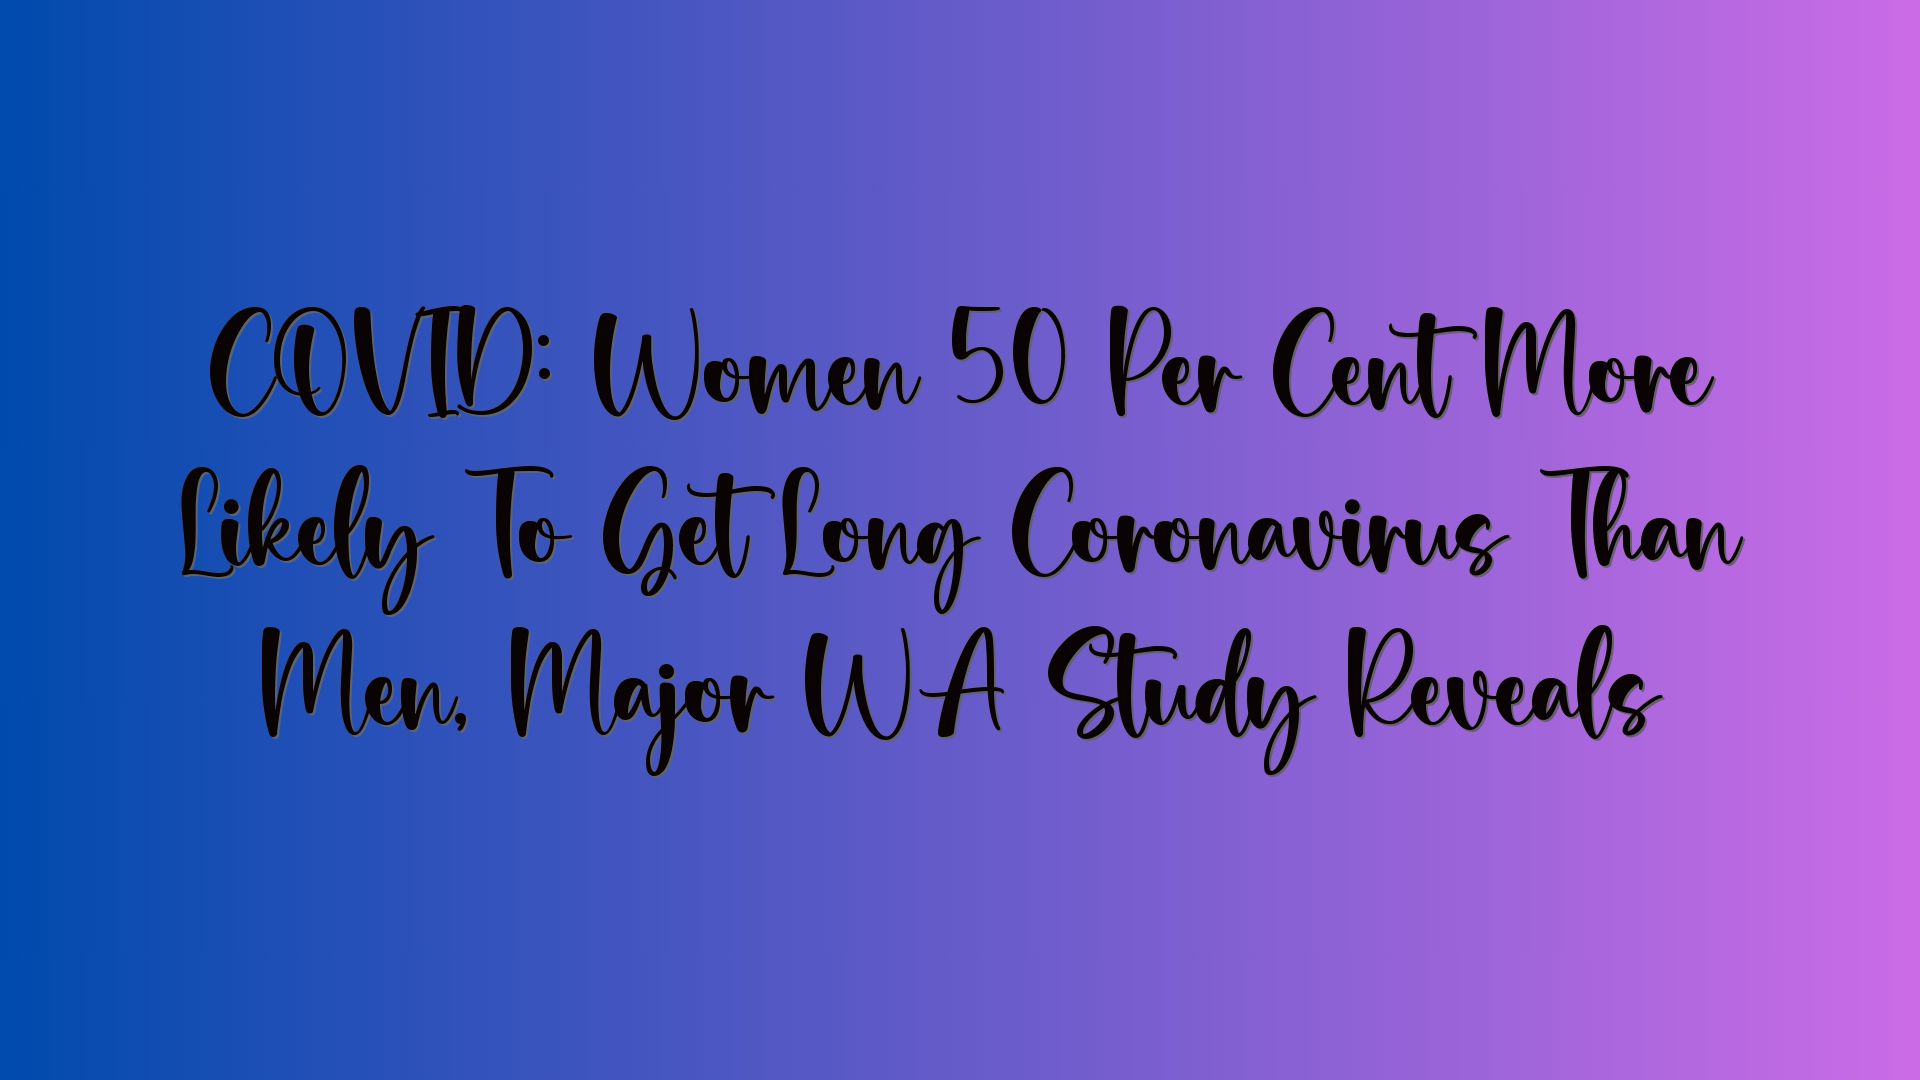 COVID: Women 50 Per Cent More Likely To Get Long Coronavirus Than Men, Major WA Study Reveals